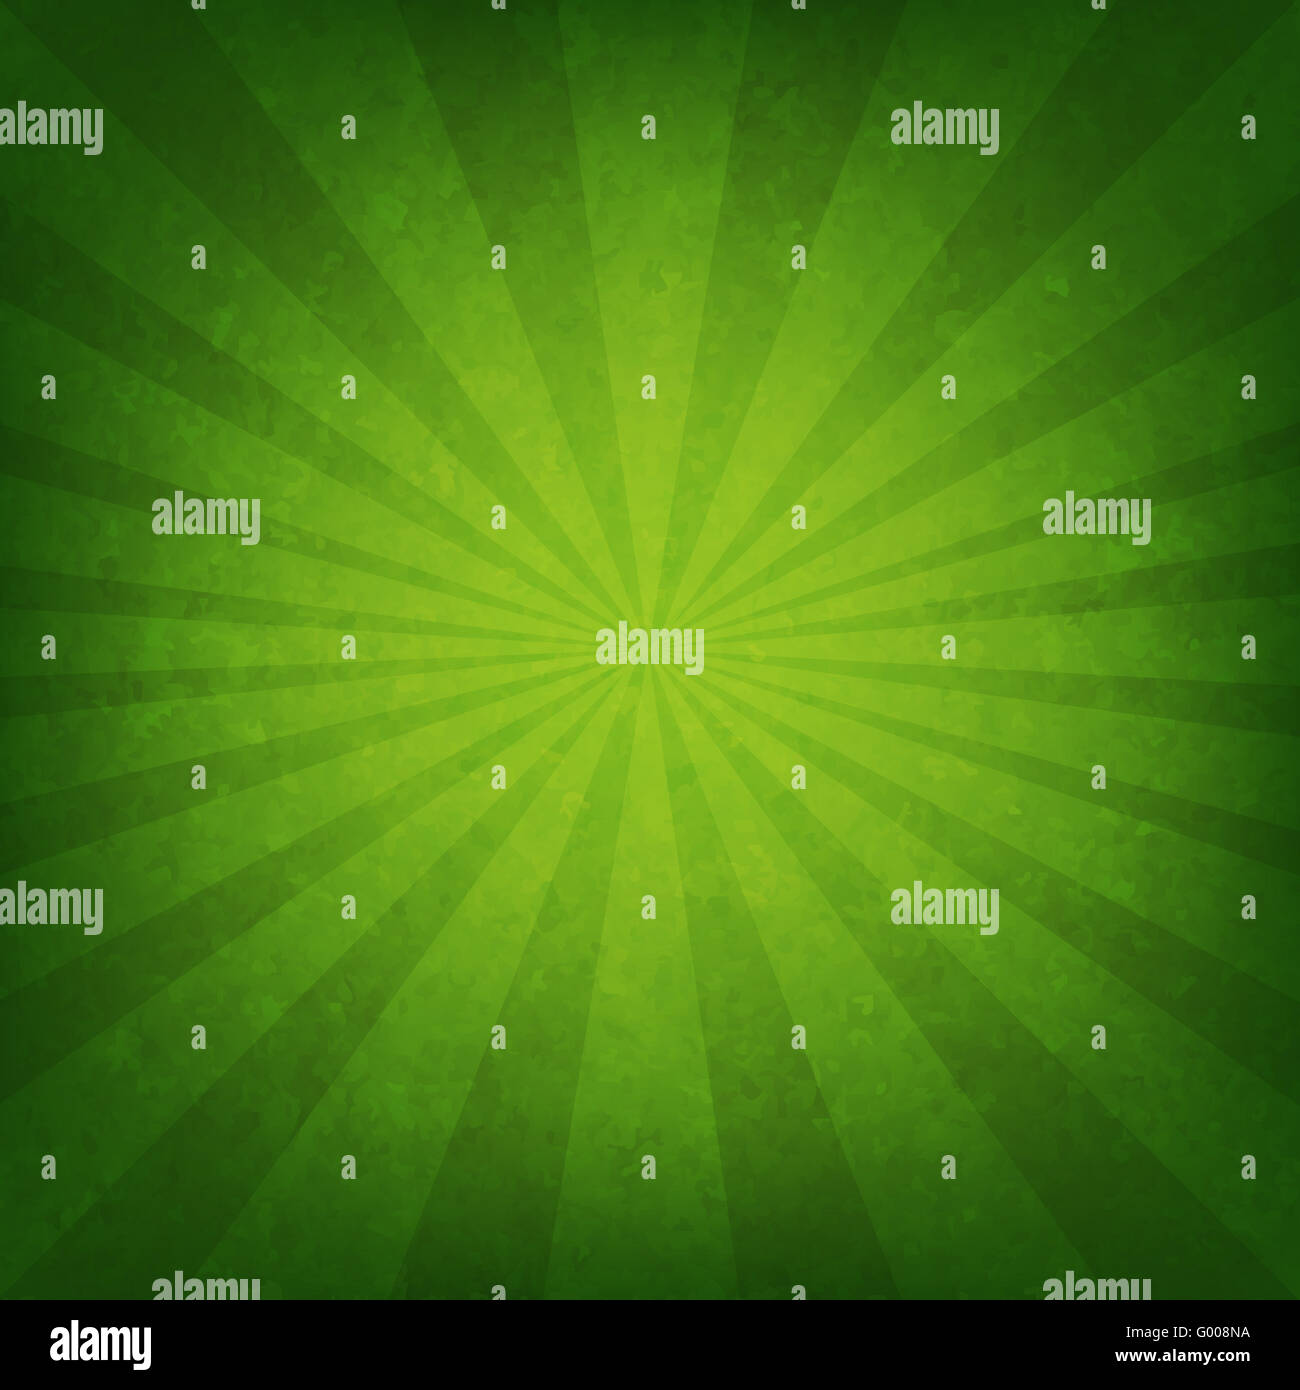 Green Sunburst Poster Stock Photo - Alamy